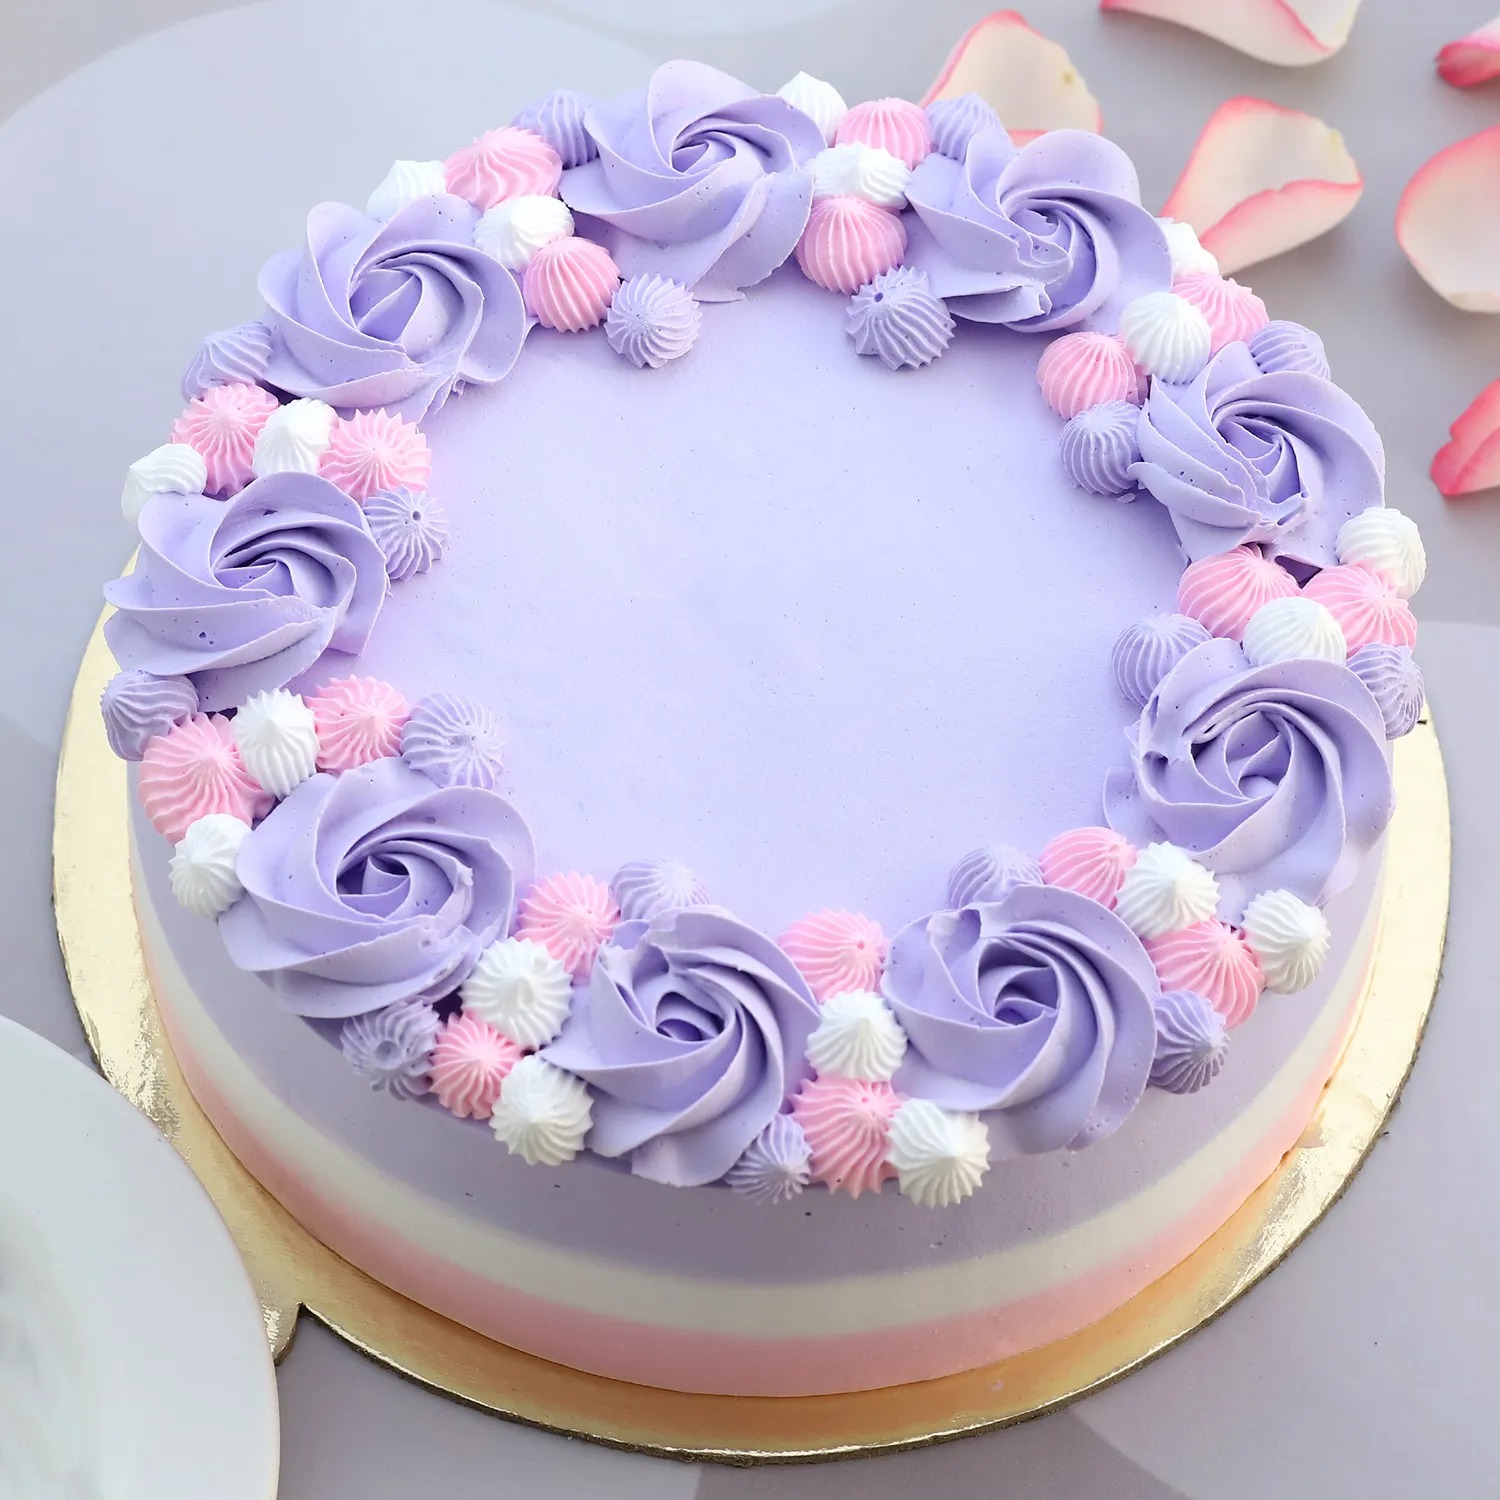 rose-paradise-chocolate-cake